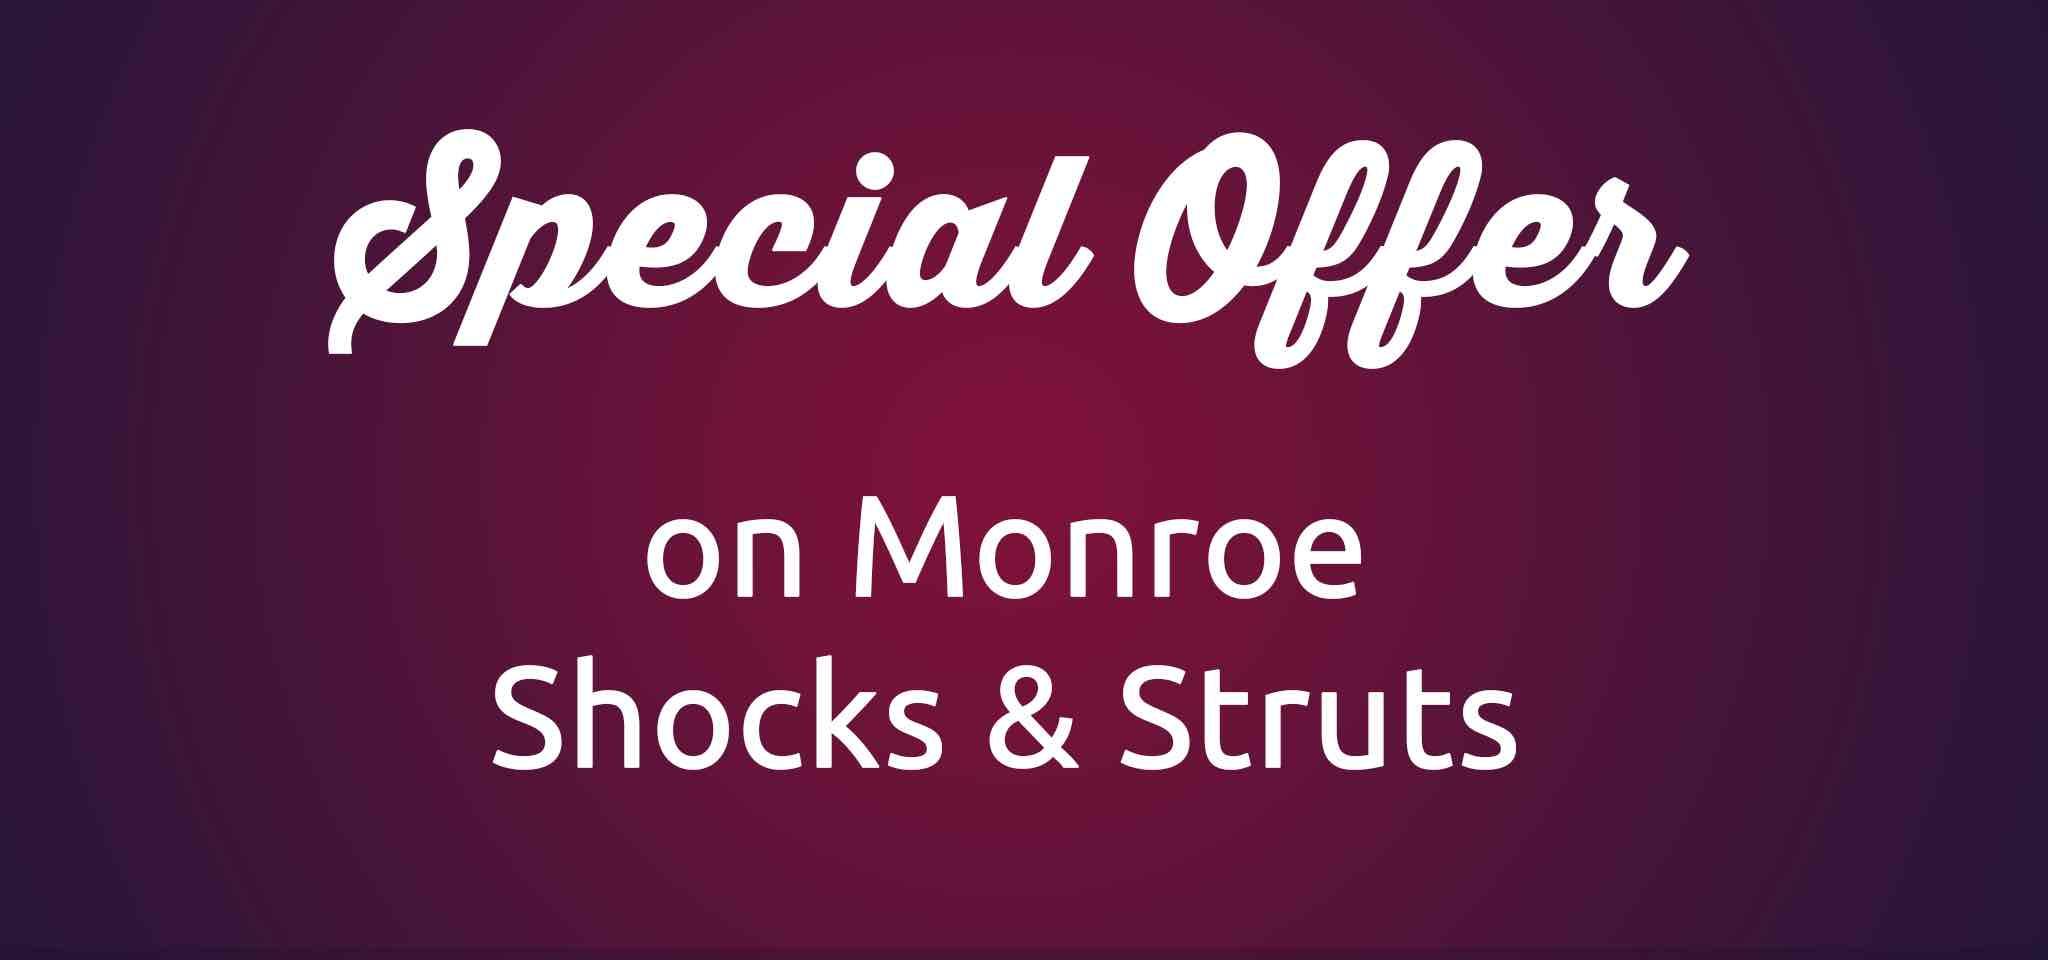 On Monroe Shocks & Struts